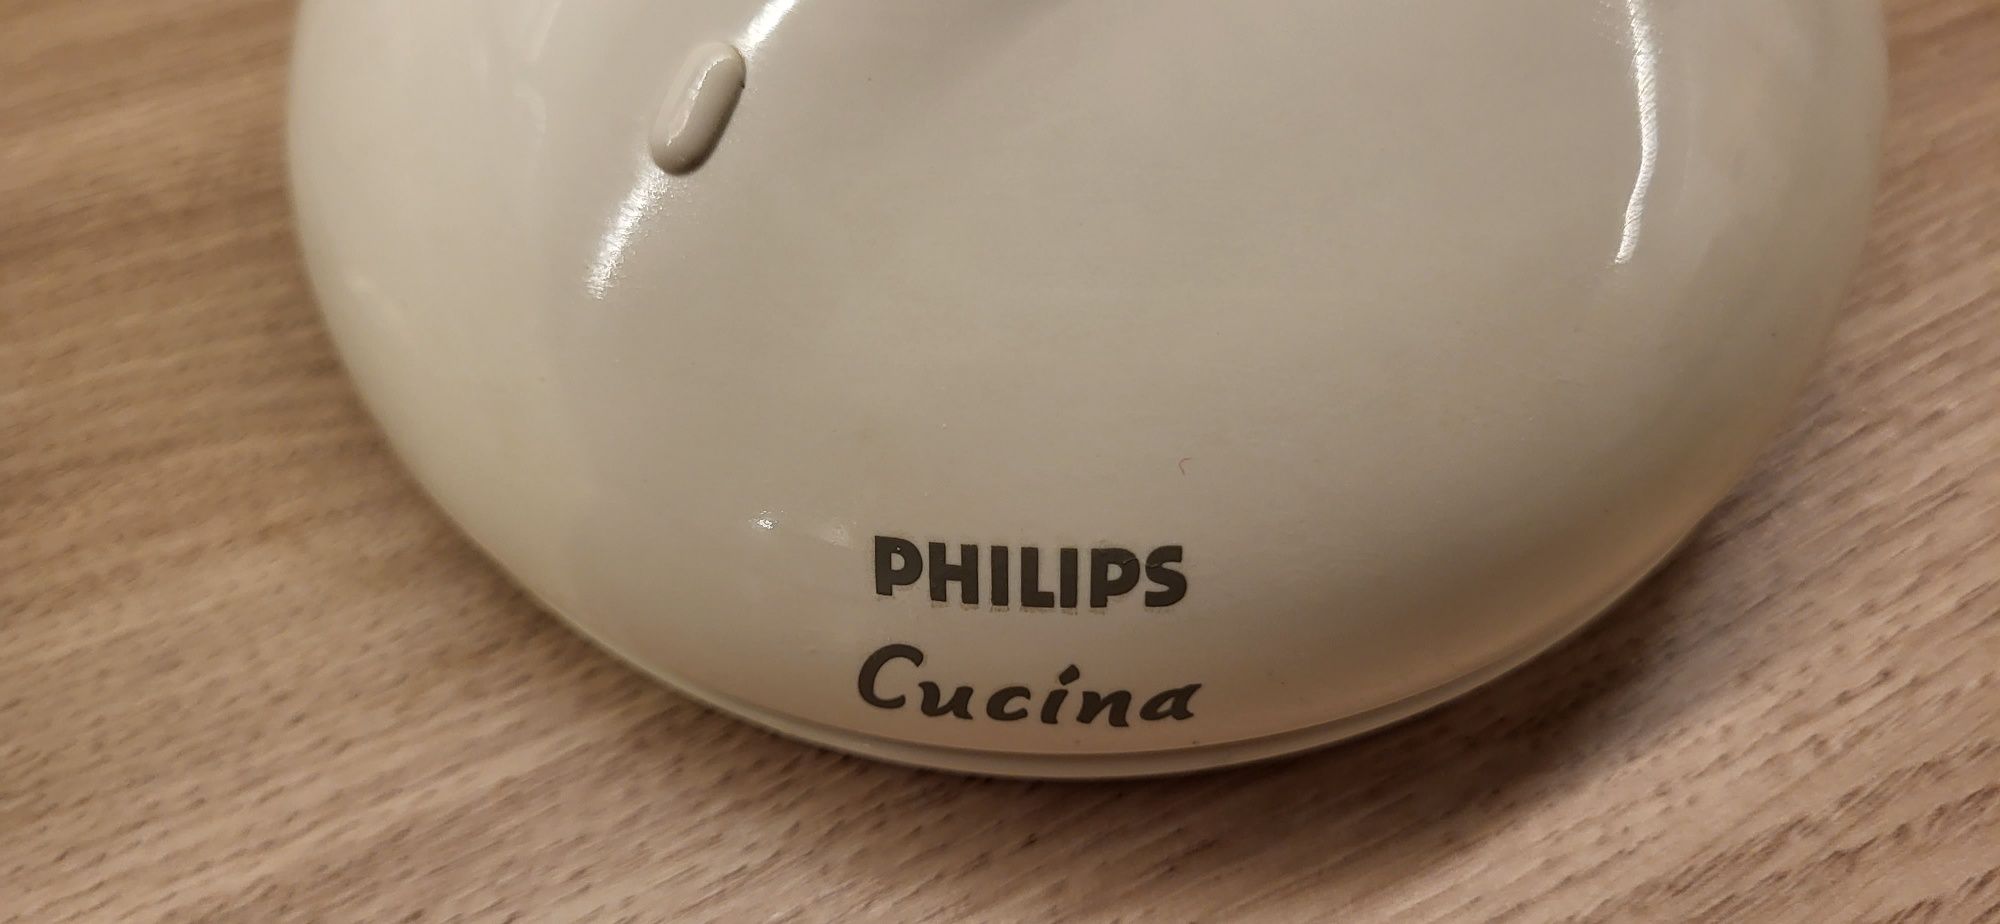 Philips Cucina retro wyciskarka